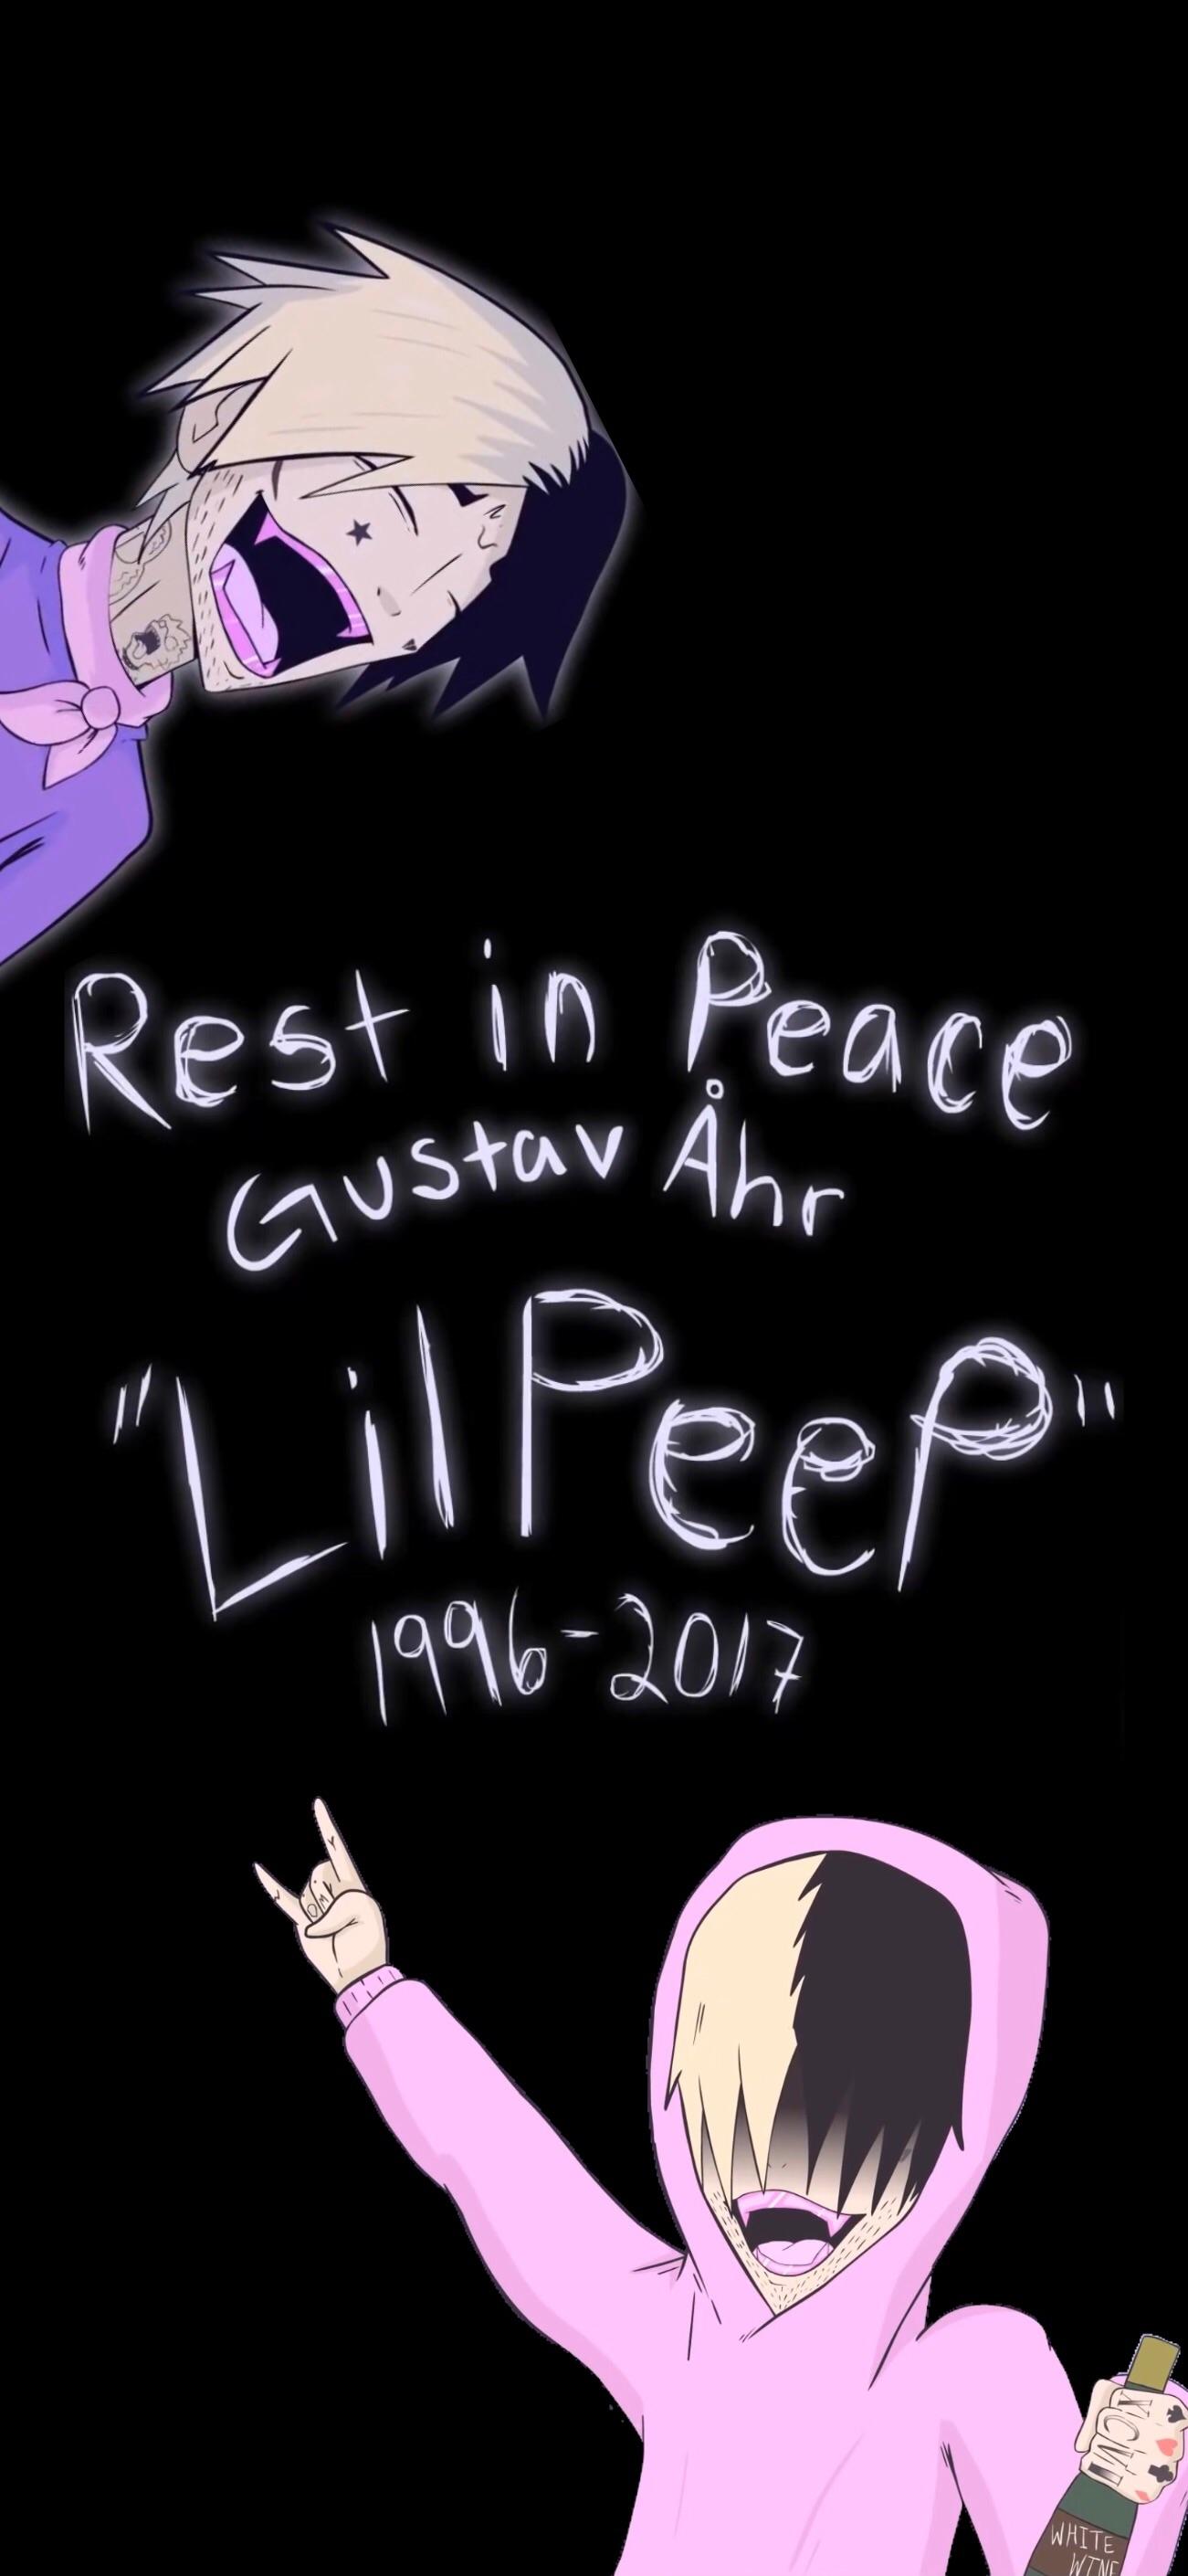 Rest in peace guustav air 2017 - Lil Peep